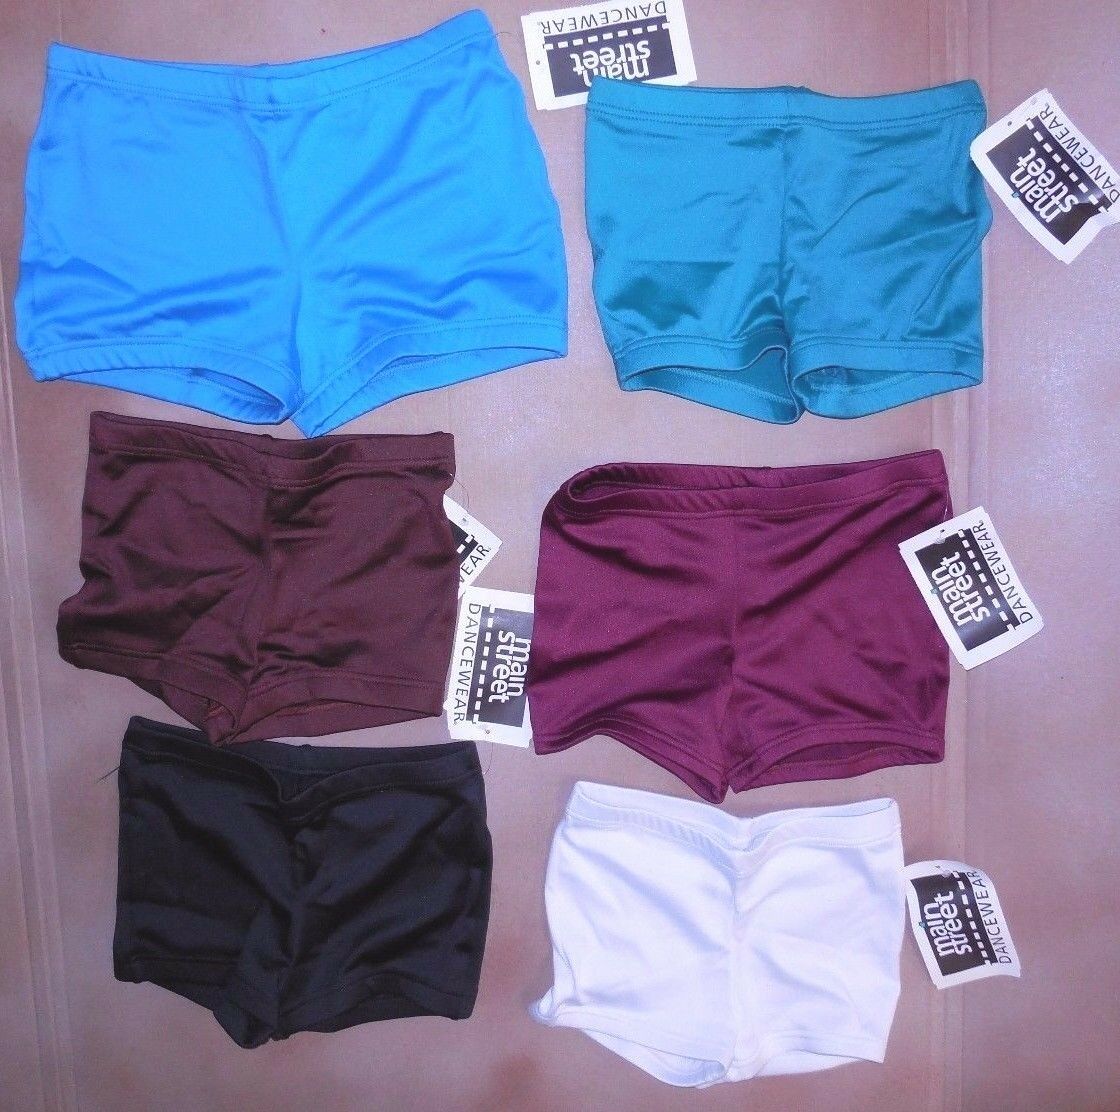 Boy Cut Shorts Booty Shorts 6 Colors Girls/ladies Spandex Dance Cheer